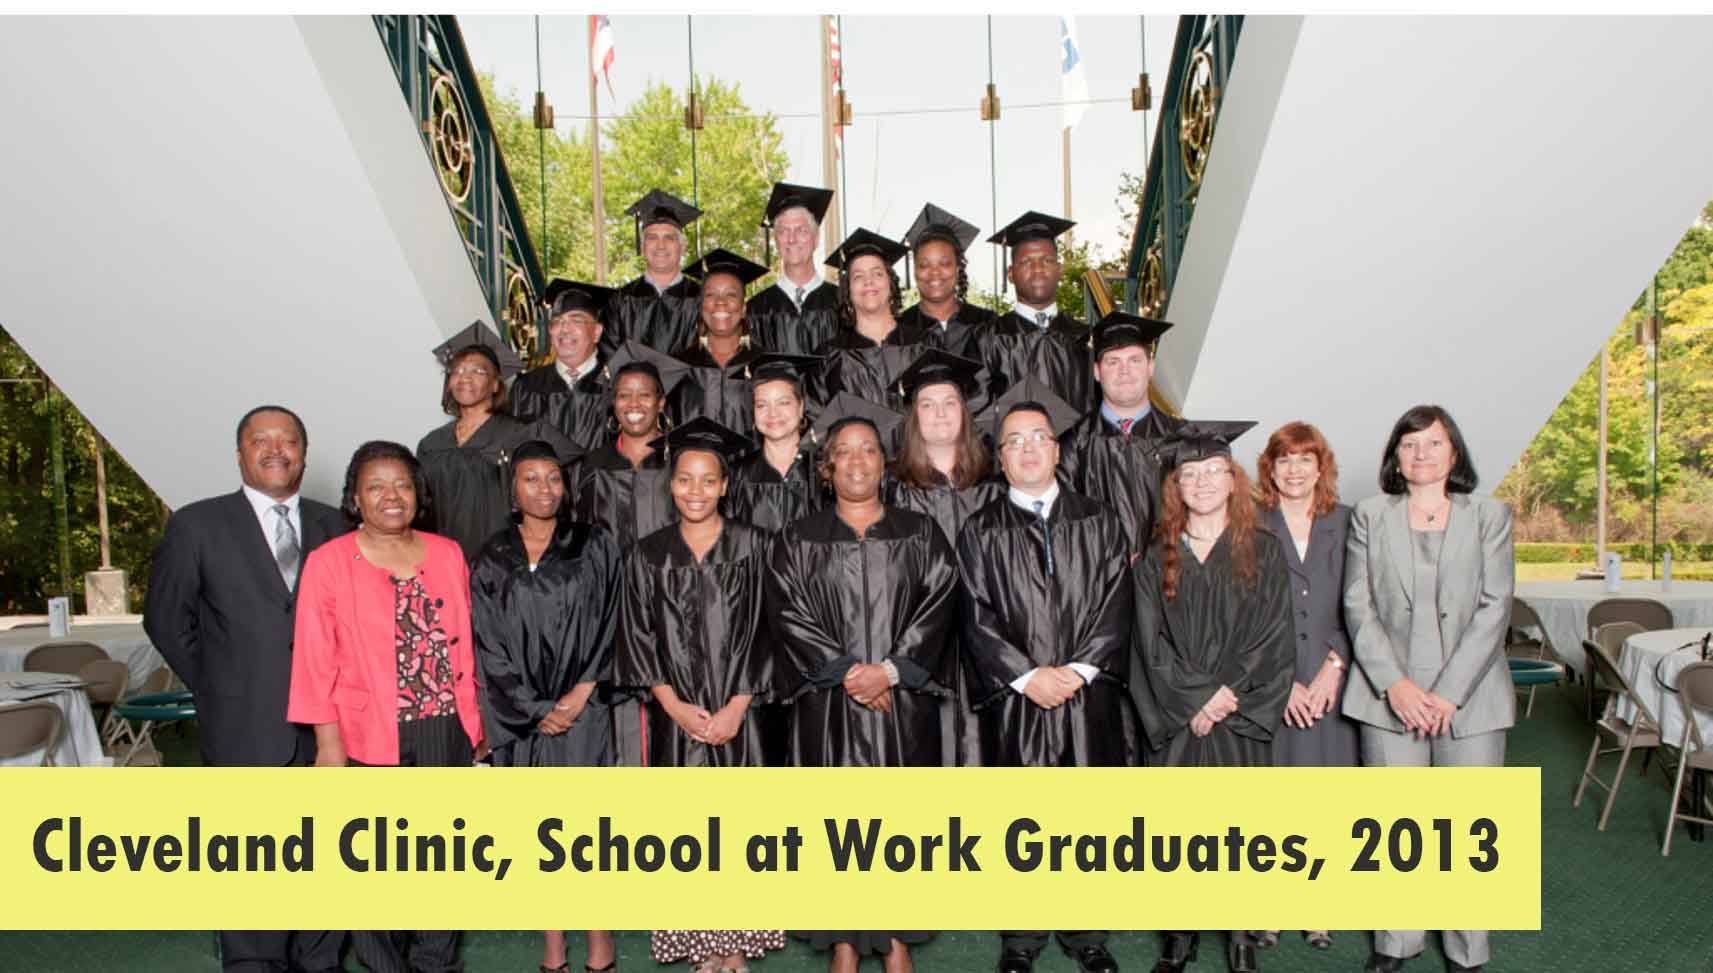 Congratulations Cleveland Clinic School at Work Graduates